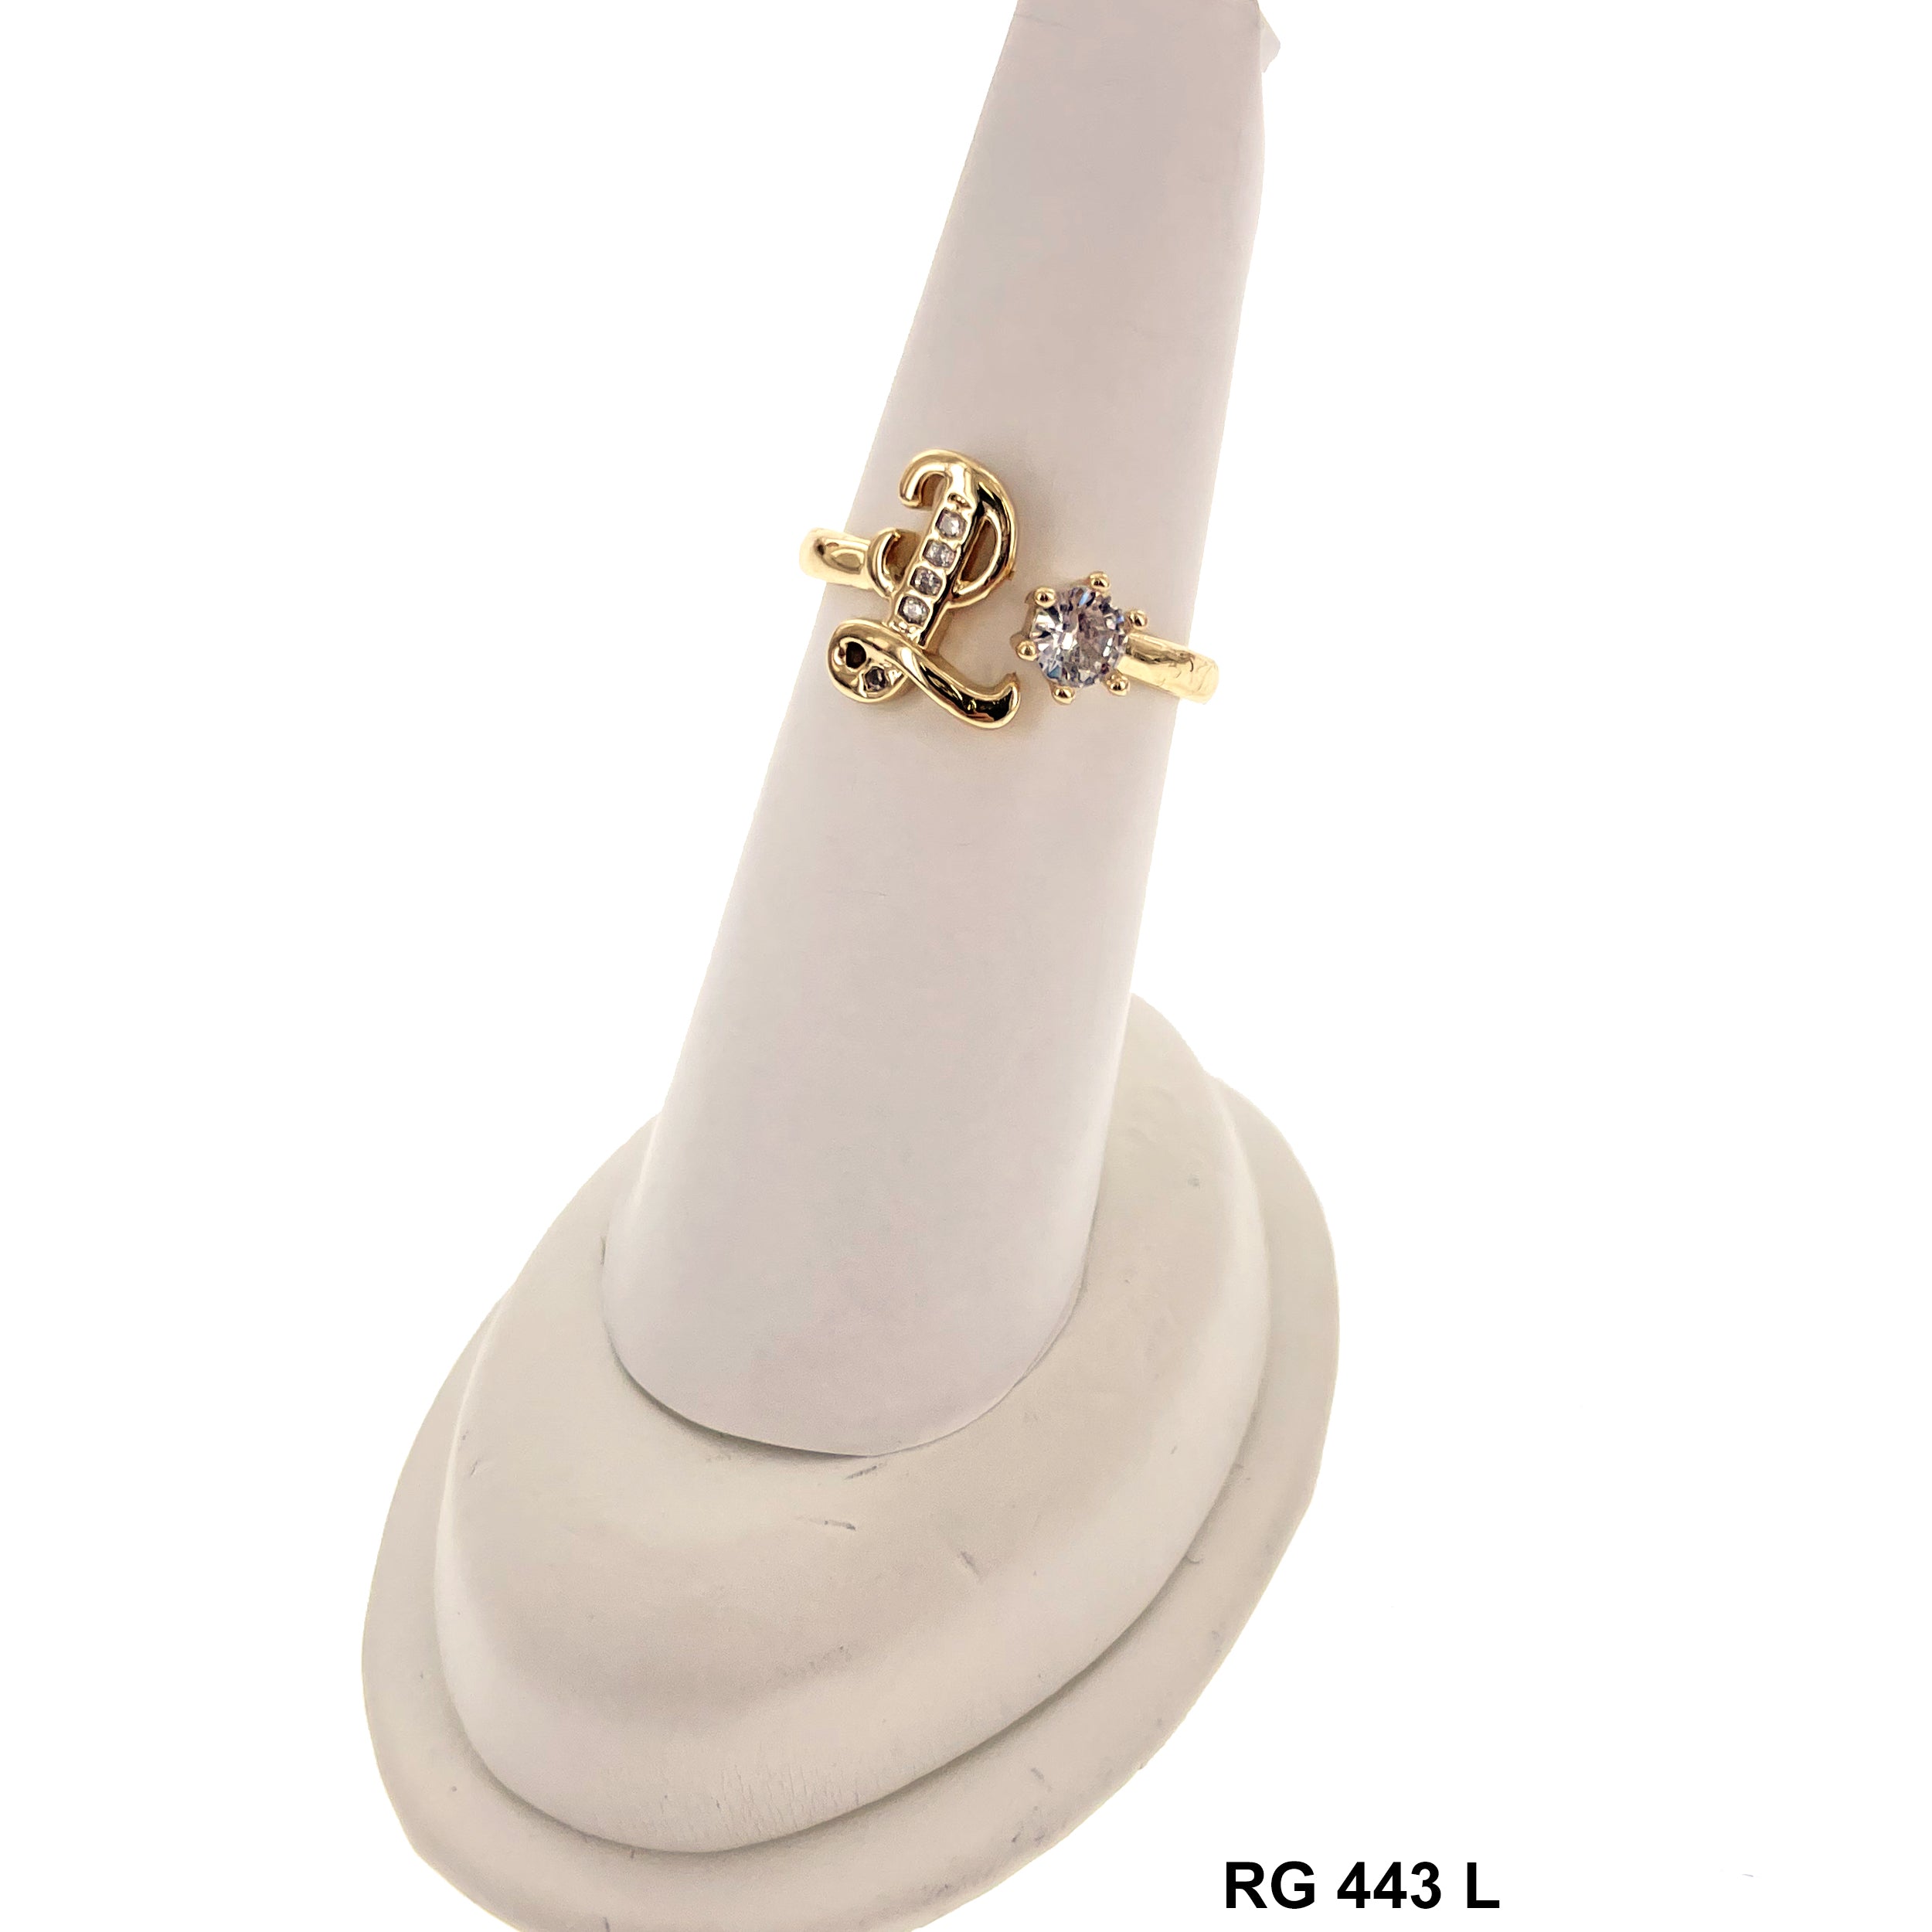 Initial Adjustable Ring RG 443 L